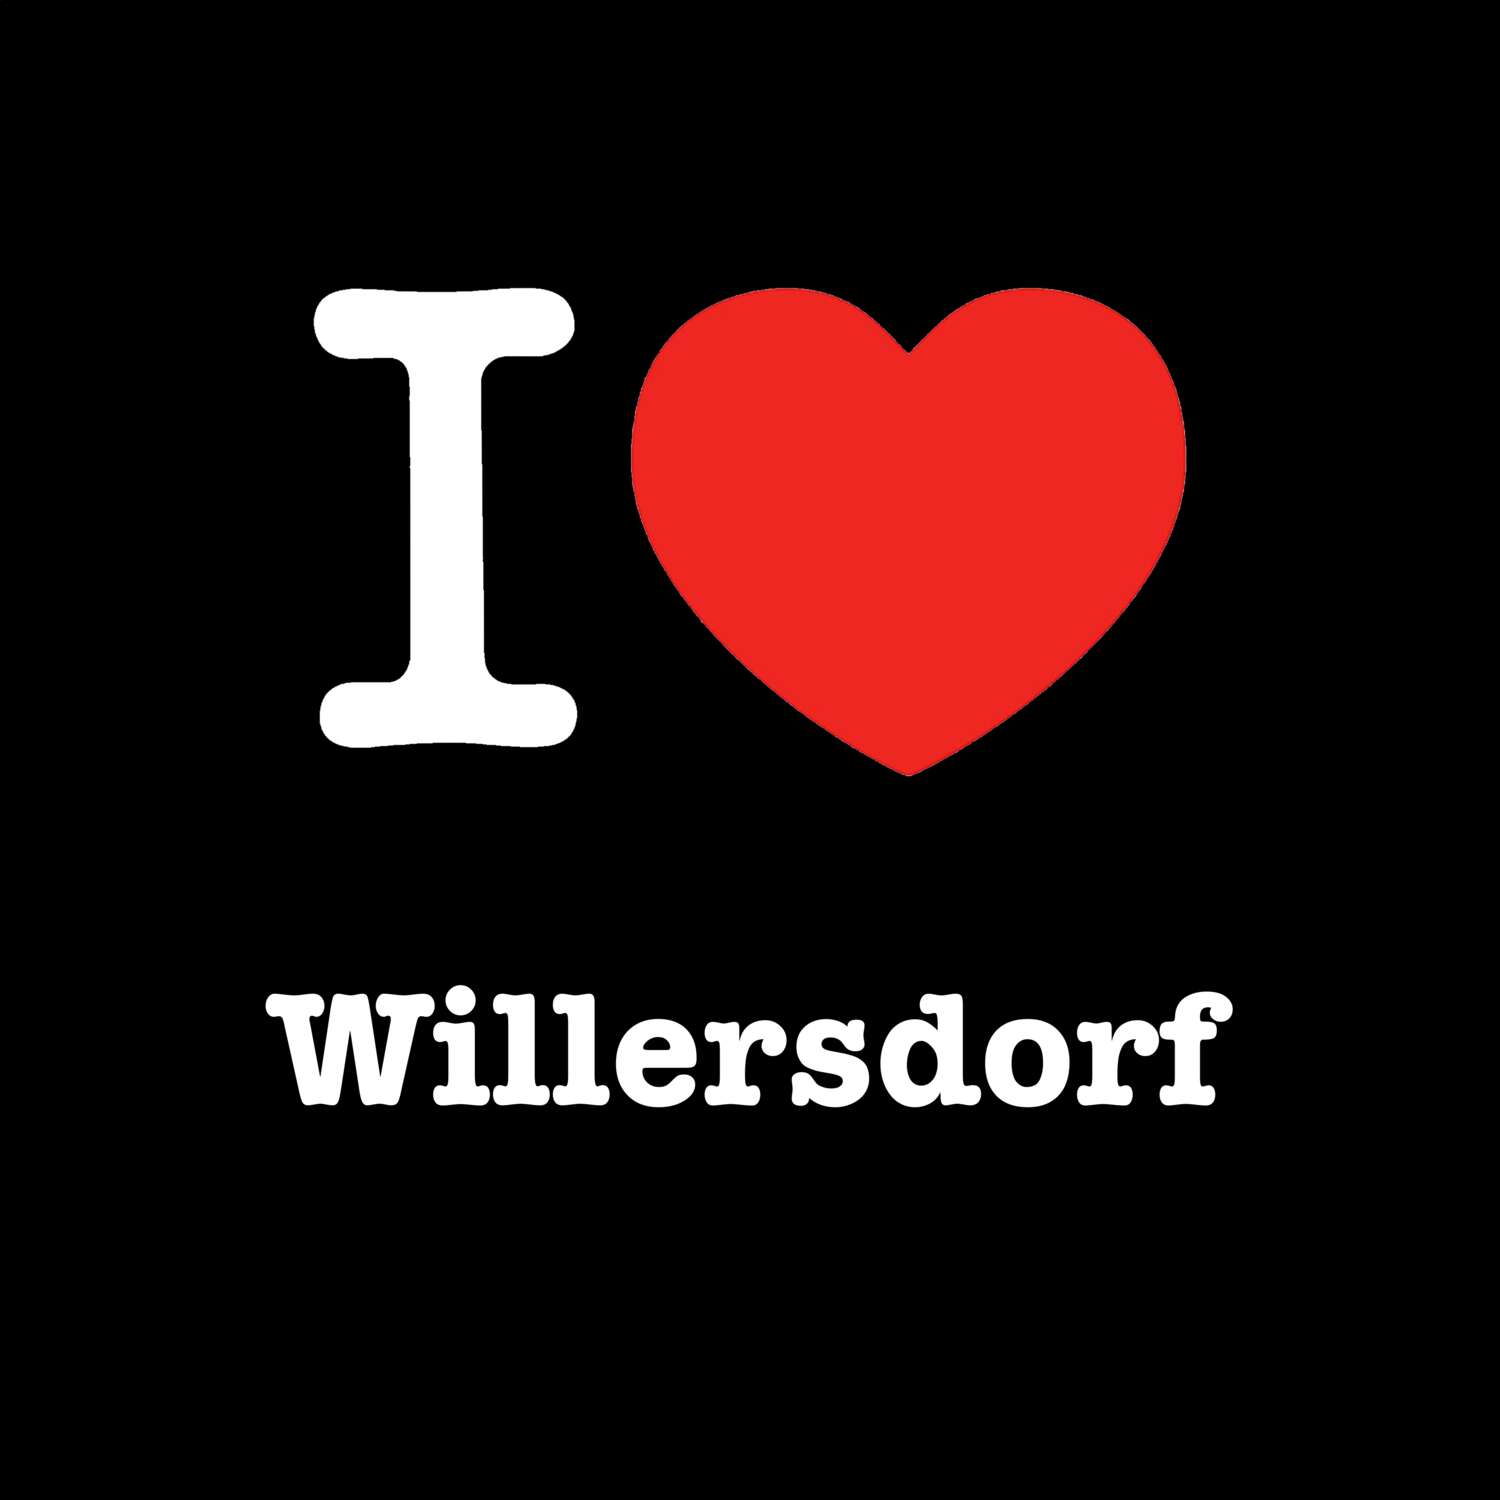 Willersdorf T-Shirt »I love«